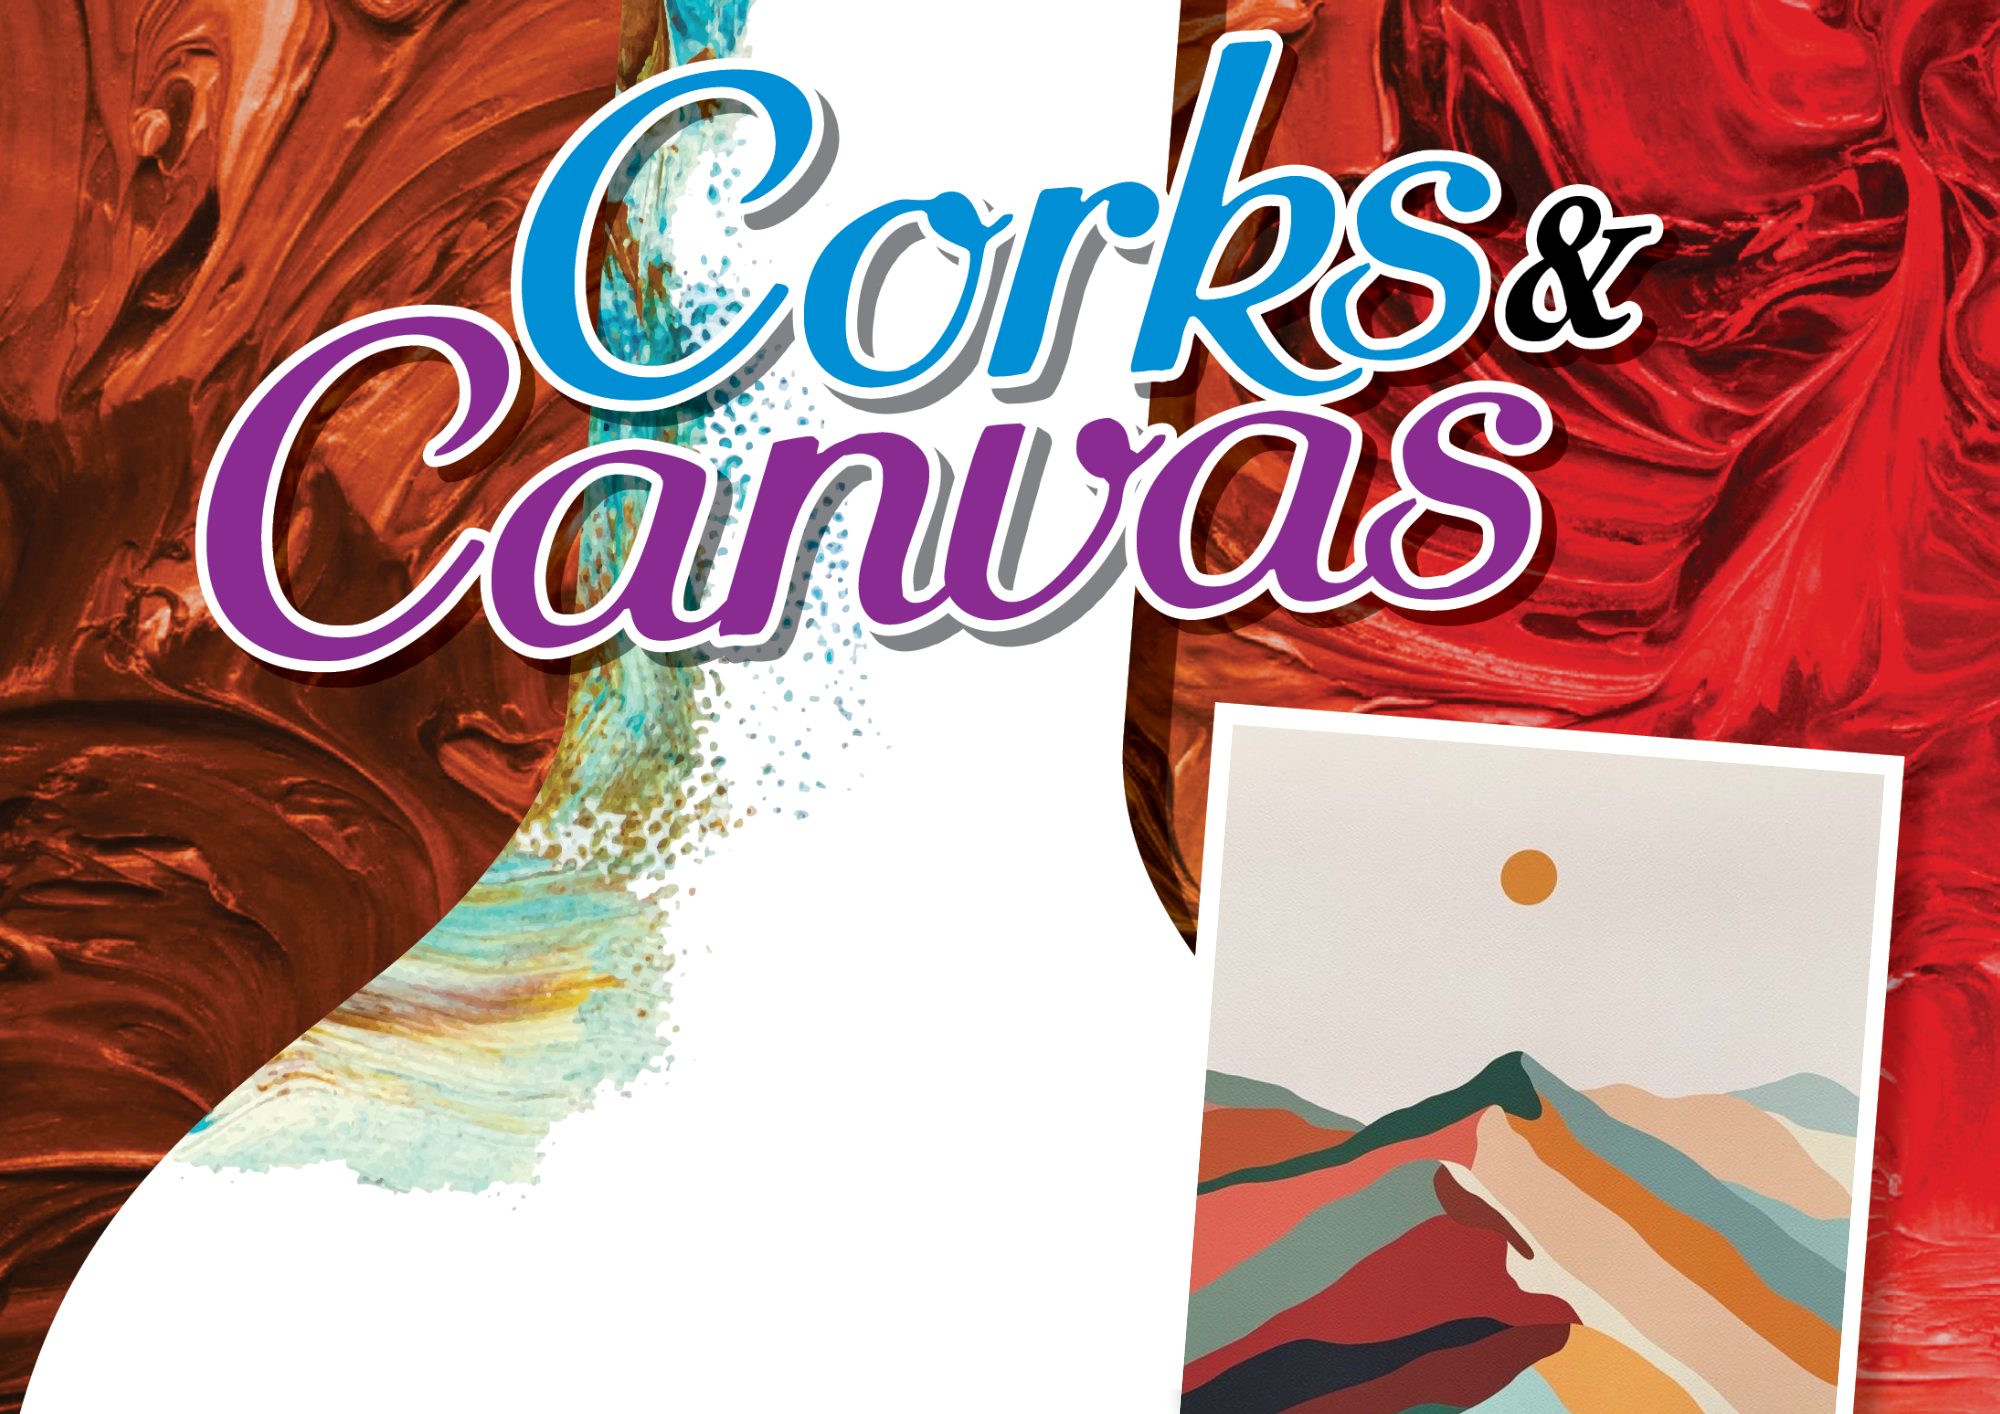 Corks & Canvas